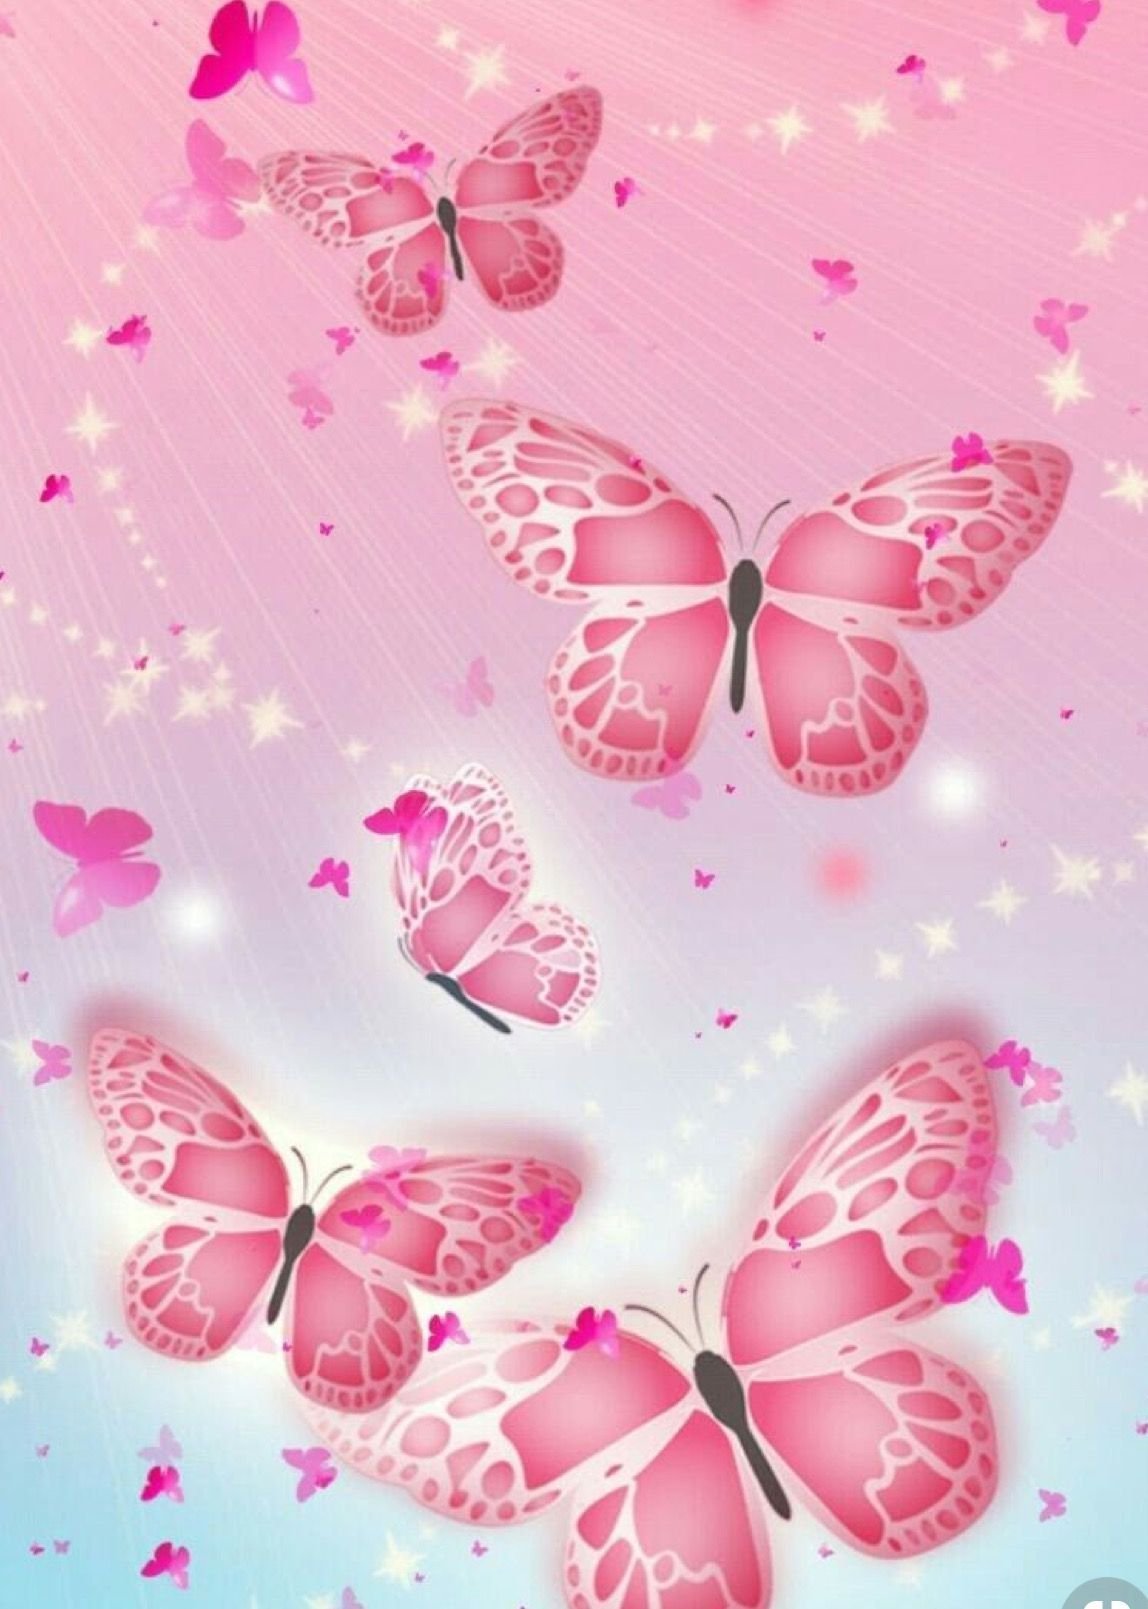 Бабочки розовые фон. Розовые бабочки. Фотообои бабочки. Фон бабочки. Красивый фон с бабочками.